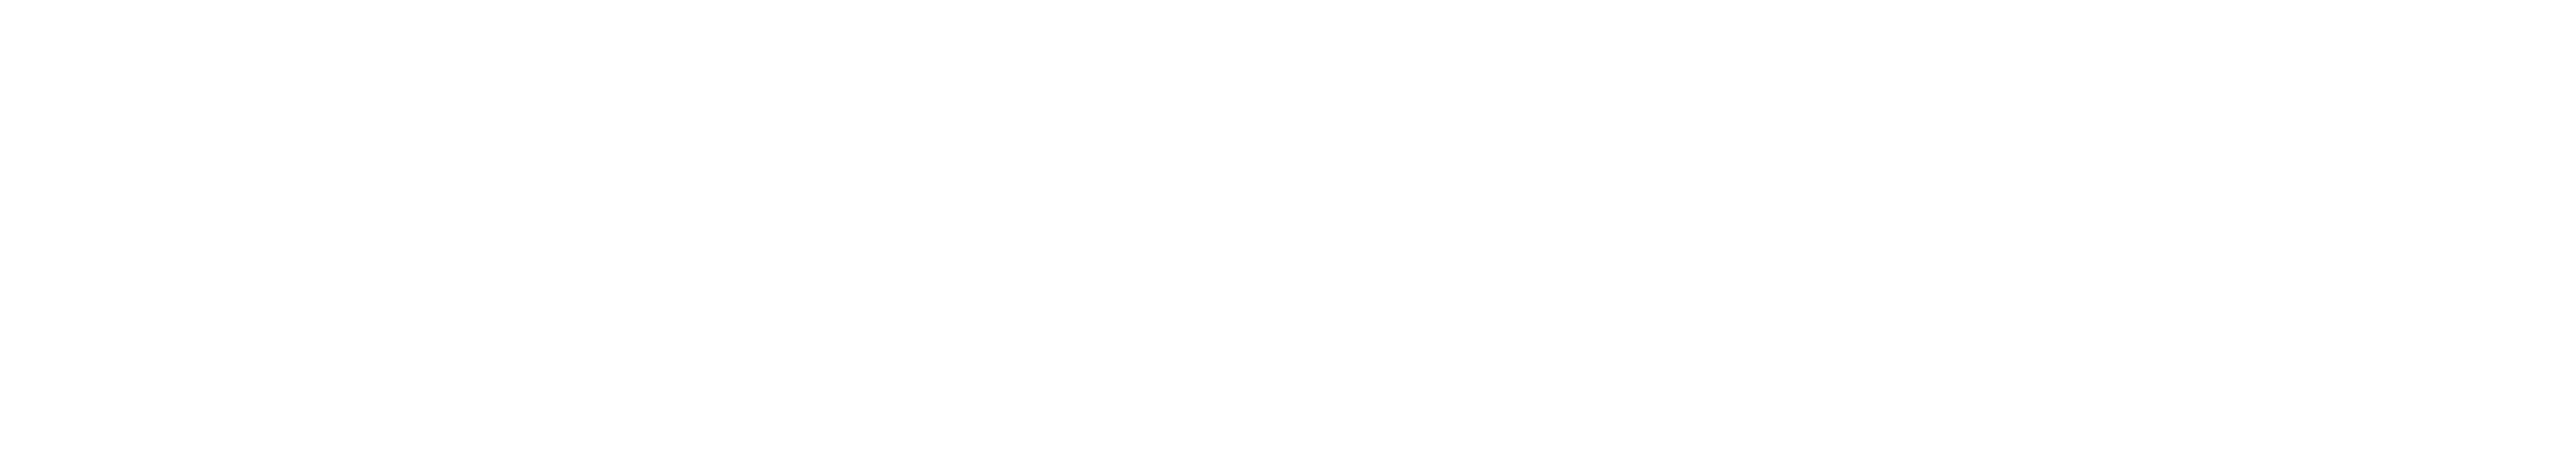 Softlandia logo